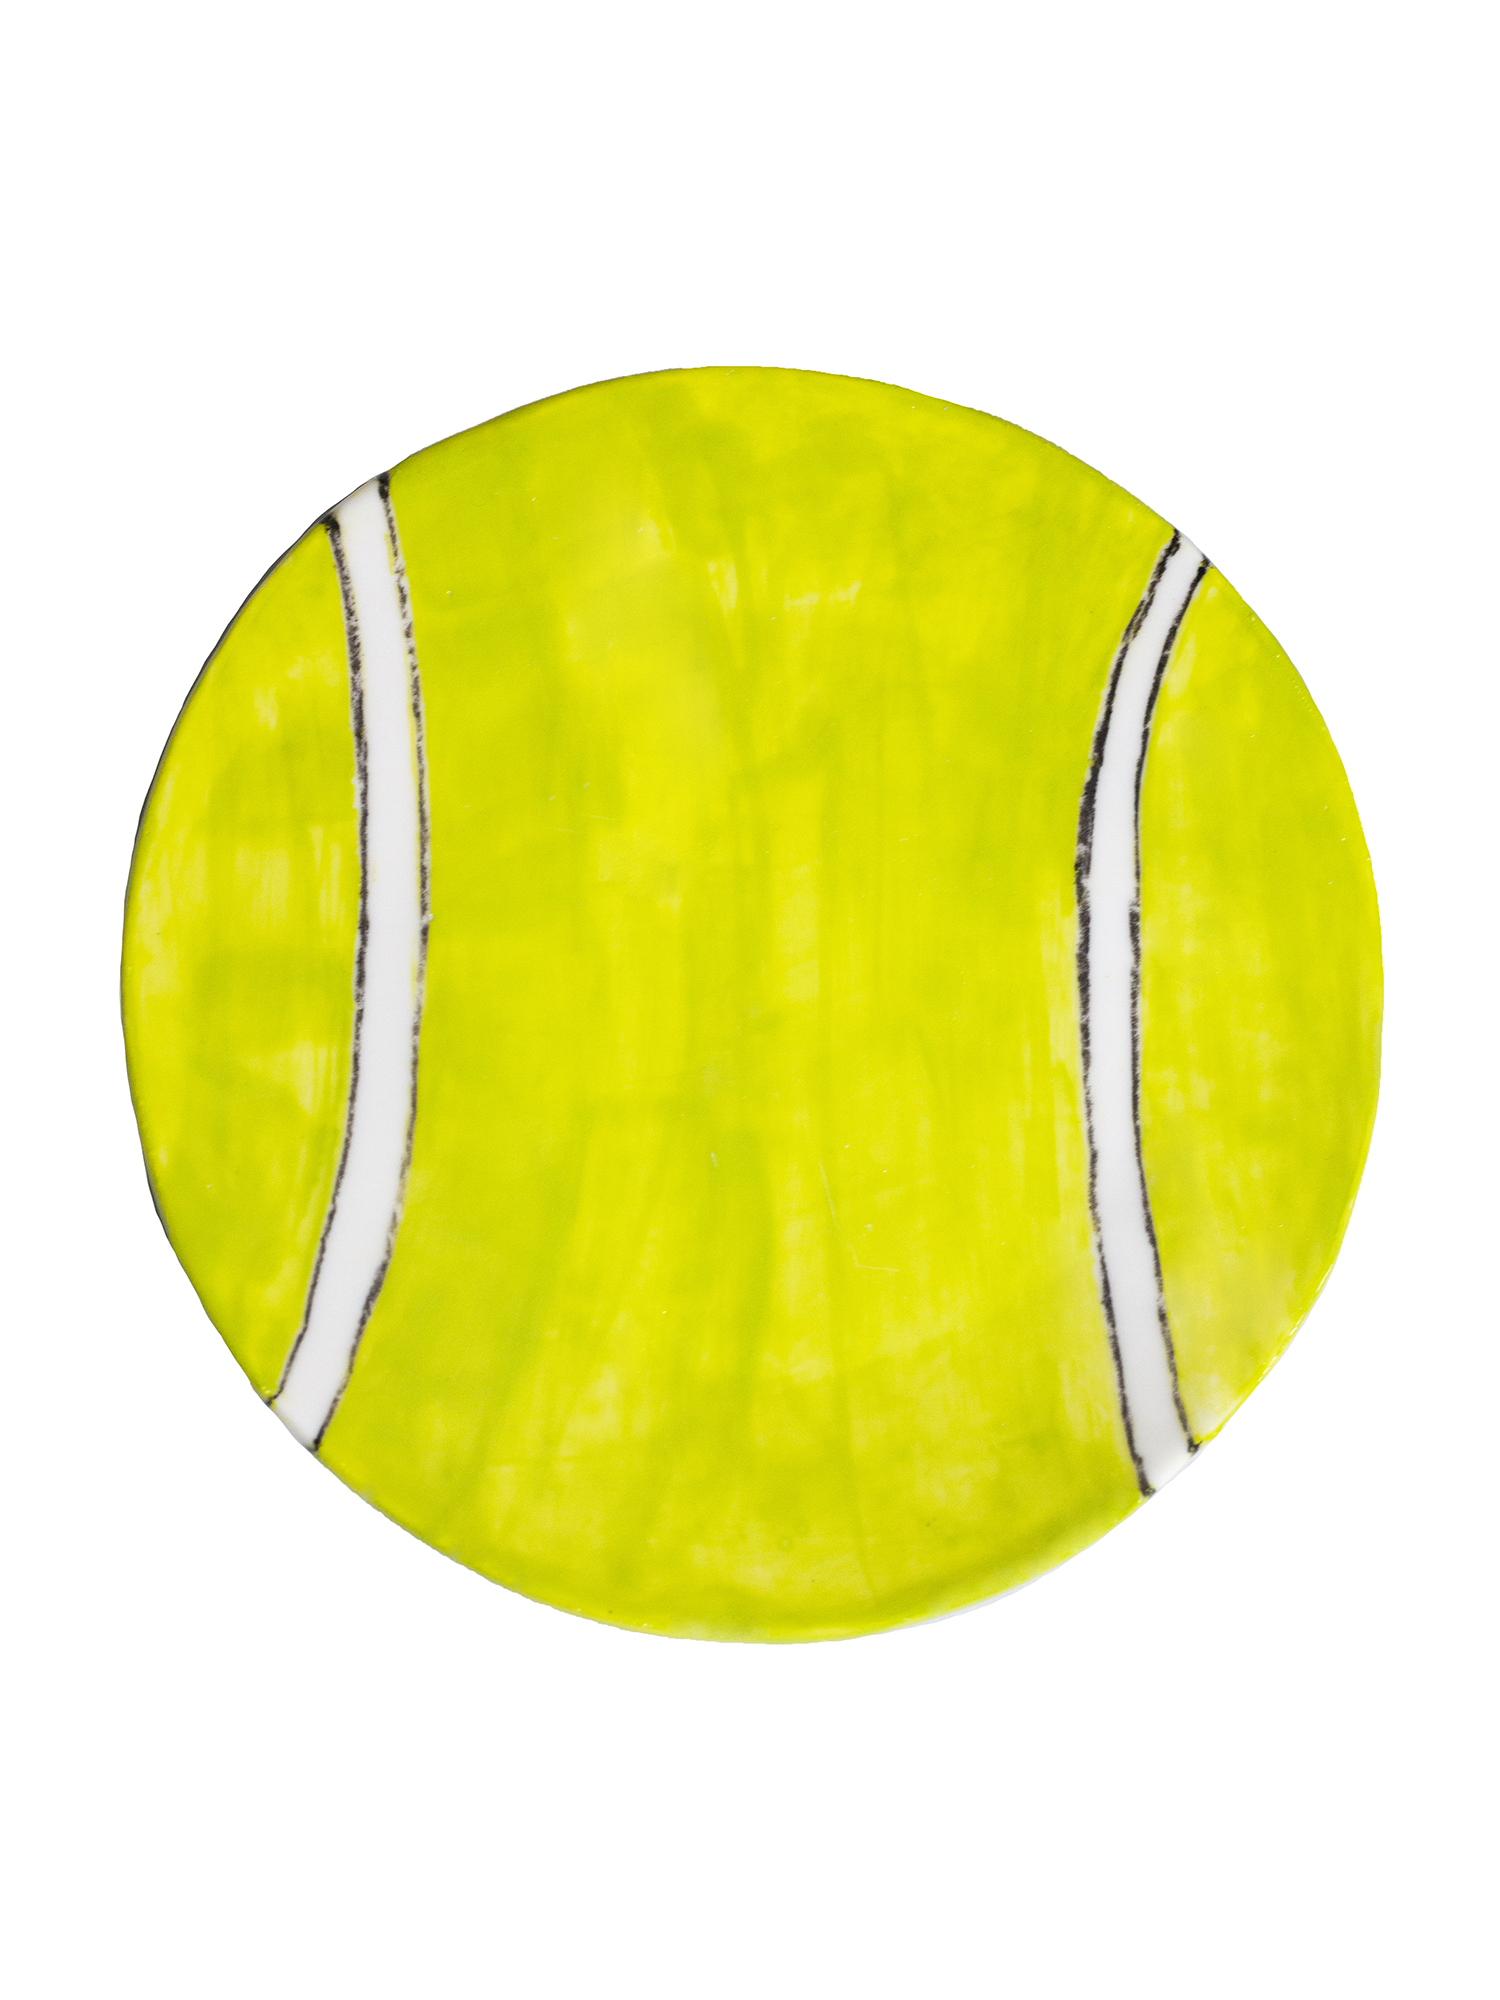 Tennis Ball Plate - Size M